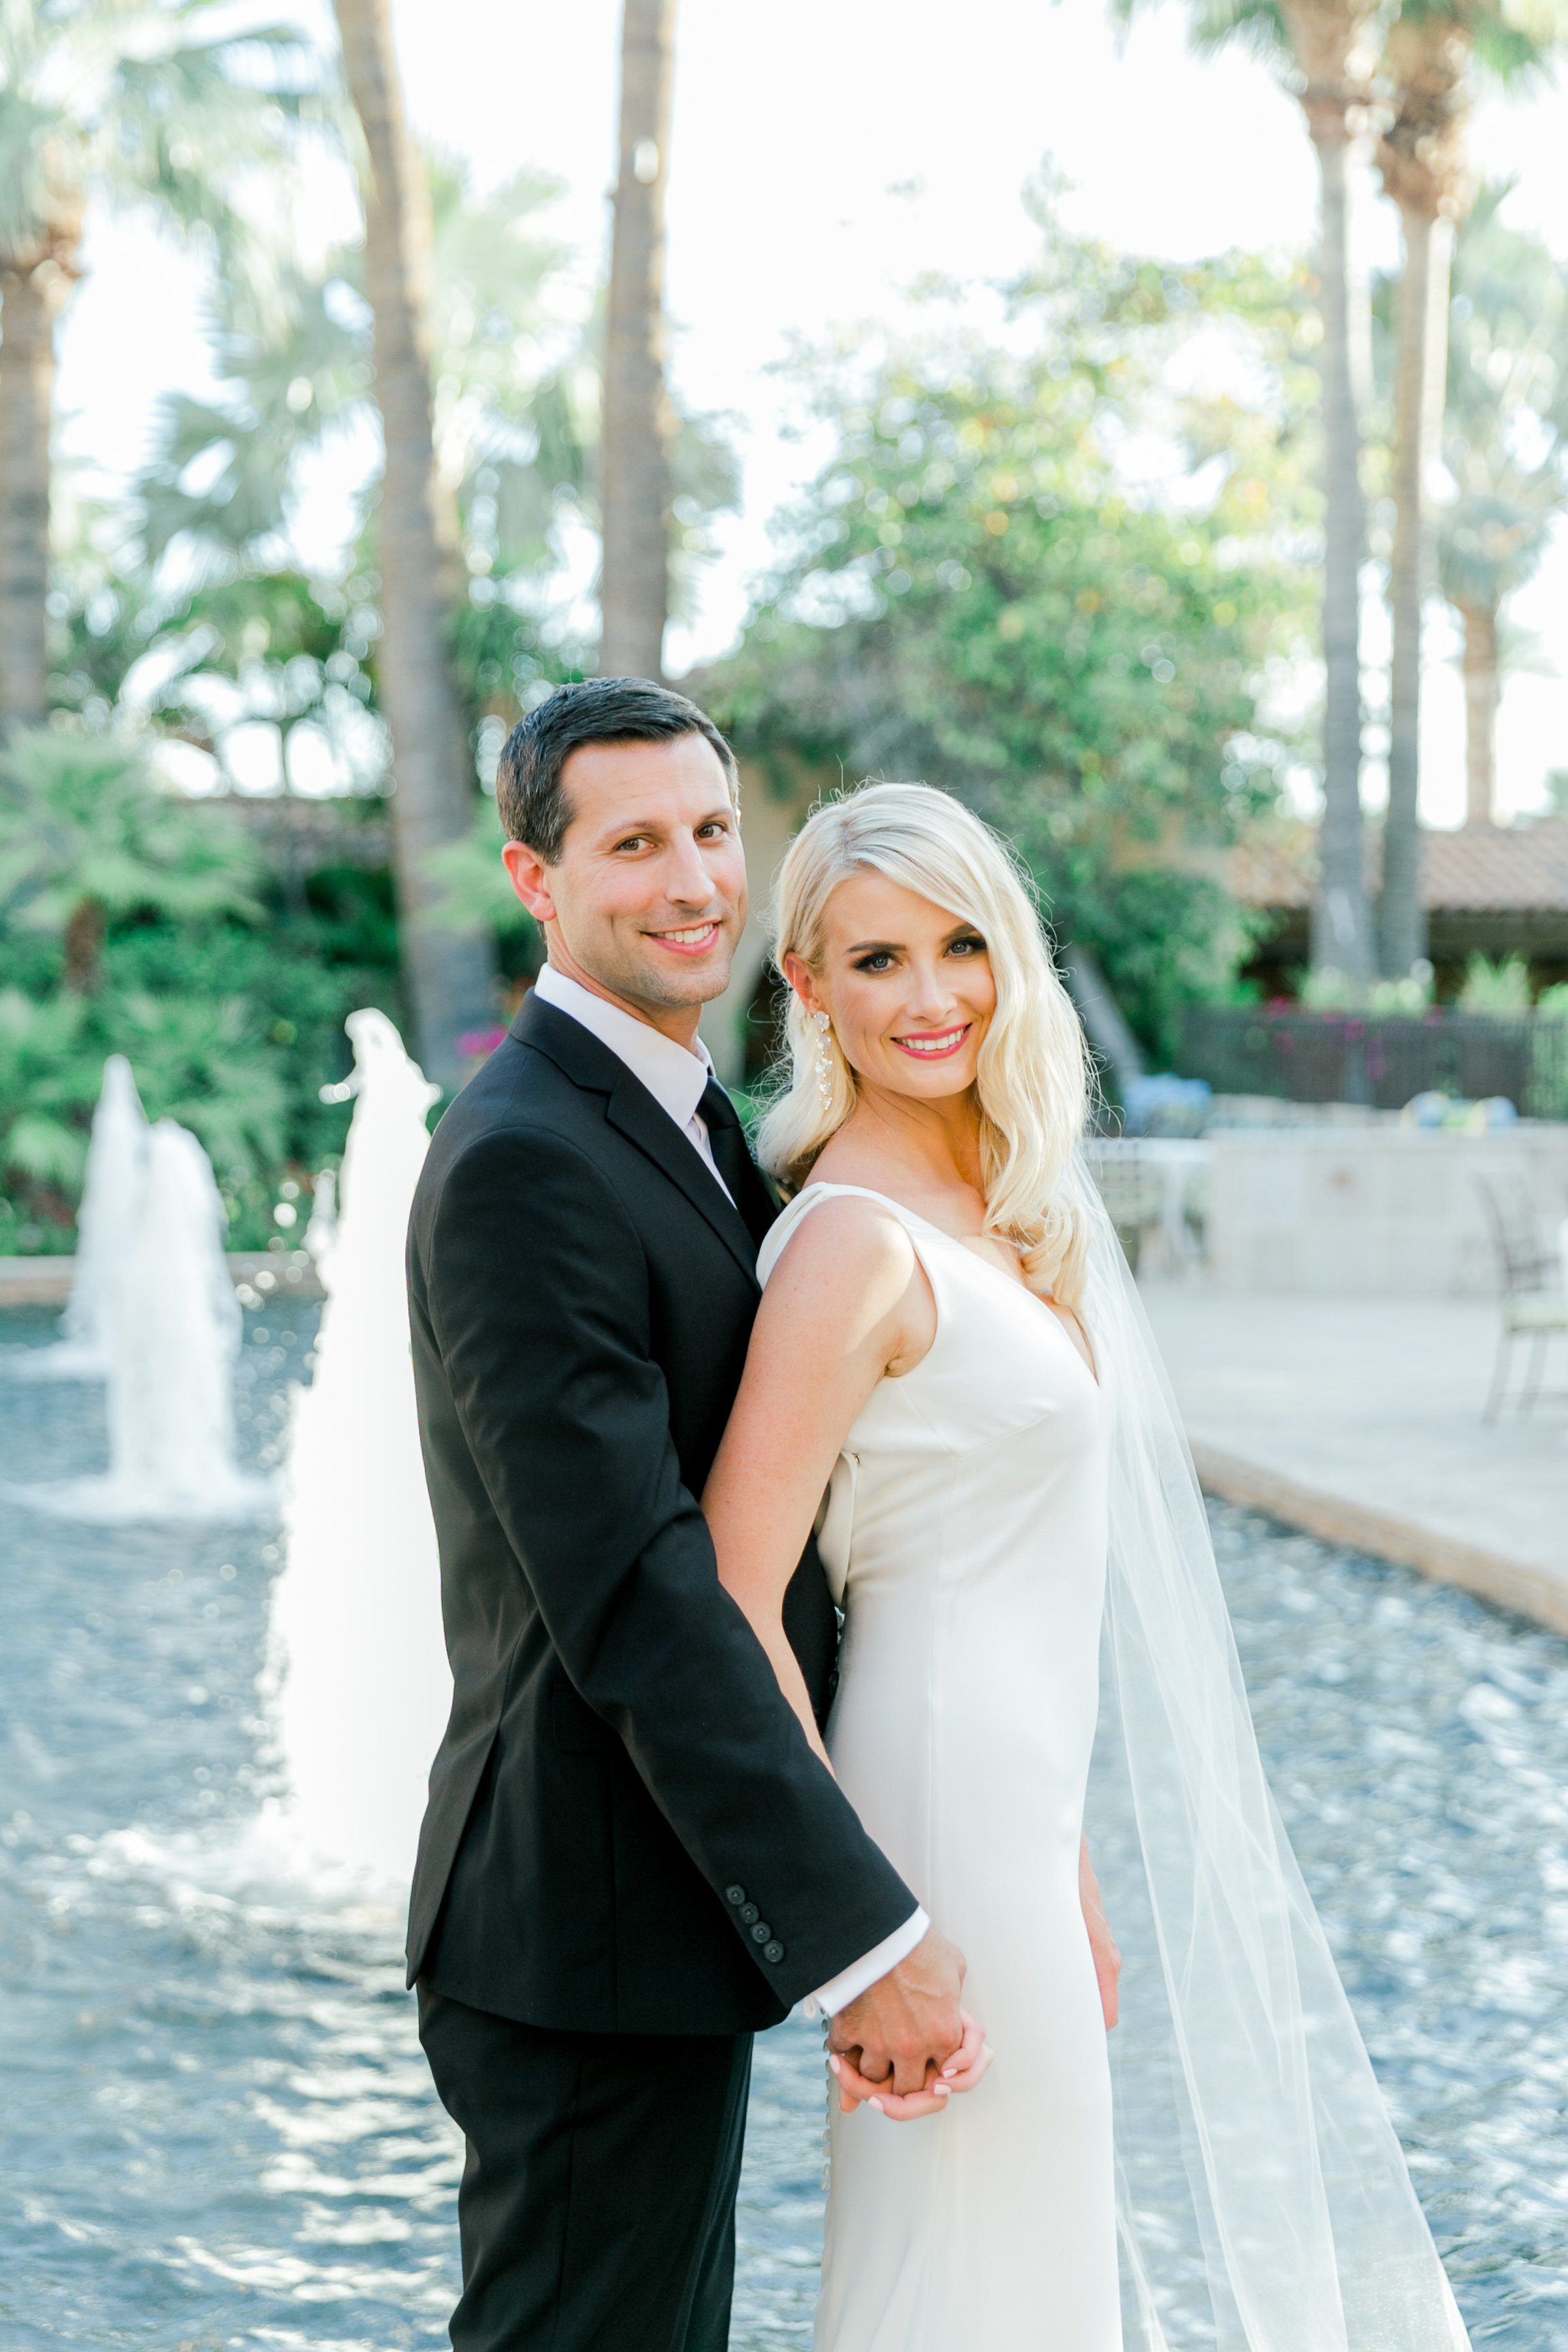 Karlie Colleen Photography - Arizona Wedding - Royal Palms Resort- Alex & Alex-137